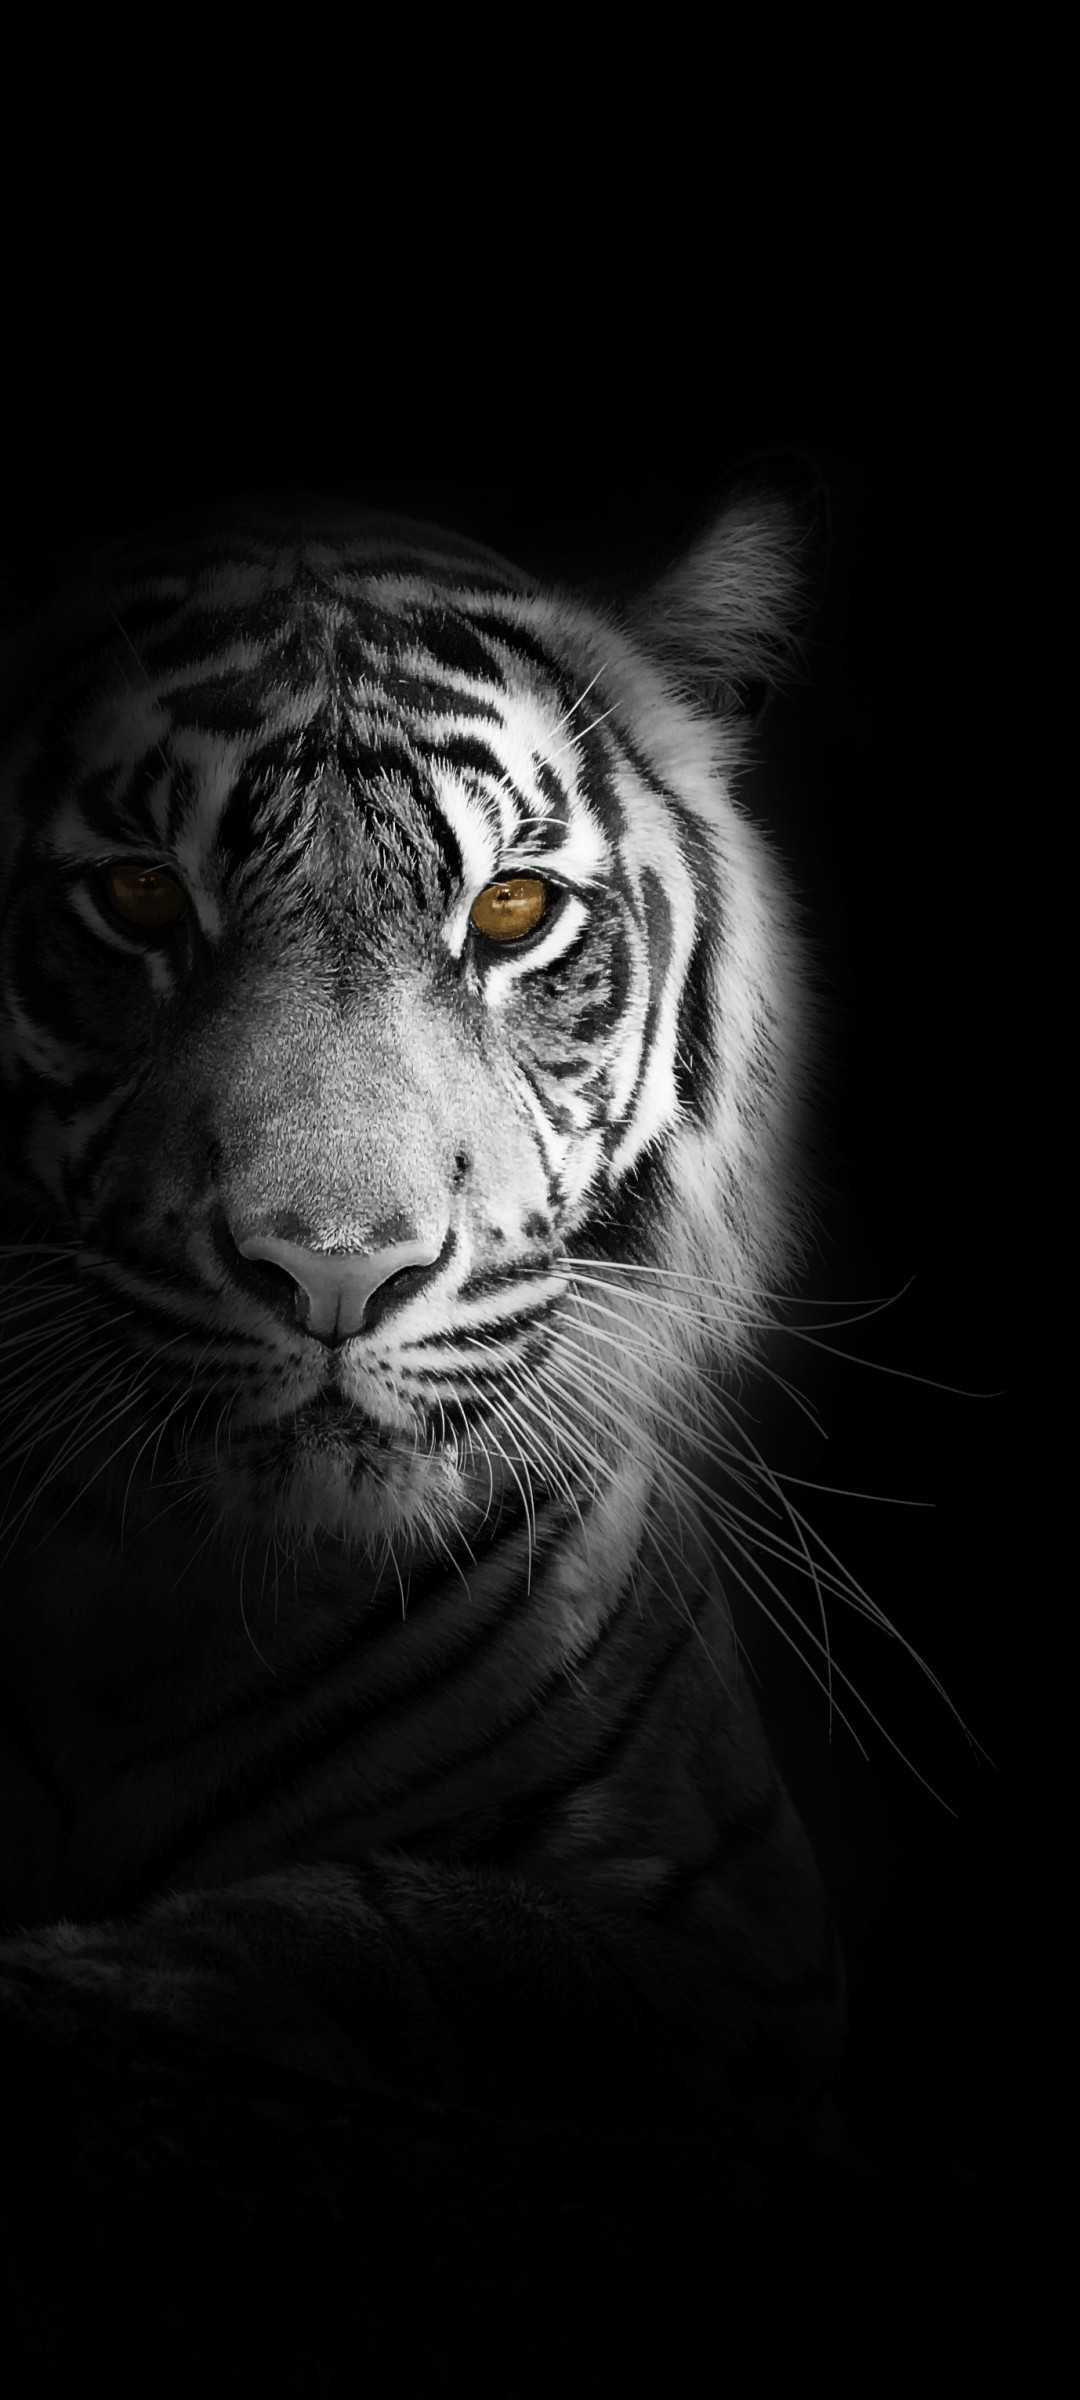 Tiger iPhone Wallpaper Free HD Wallpaper